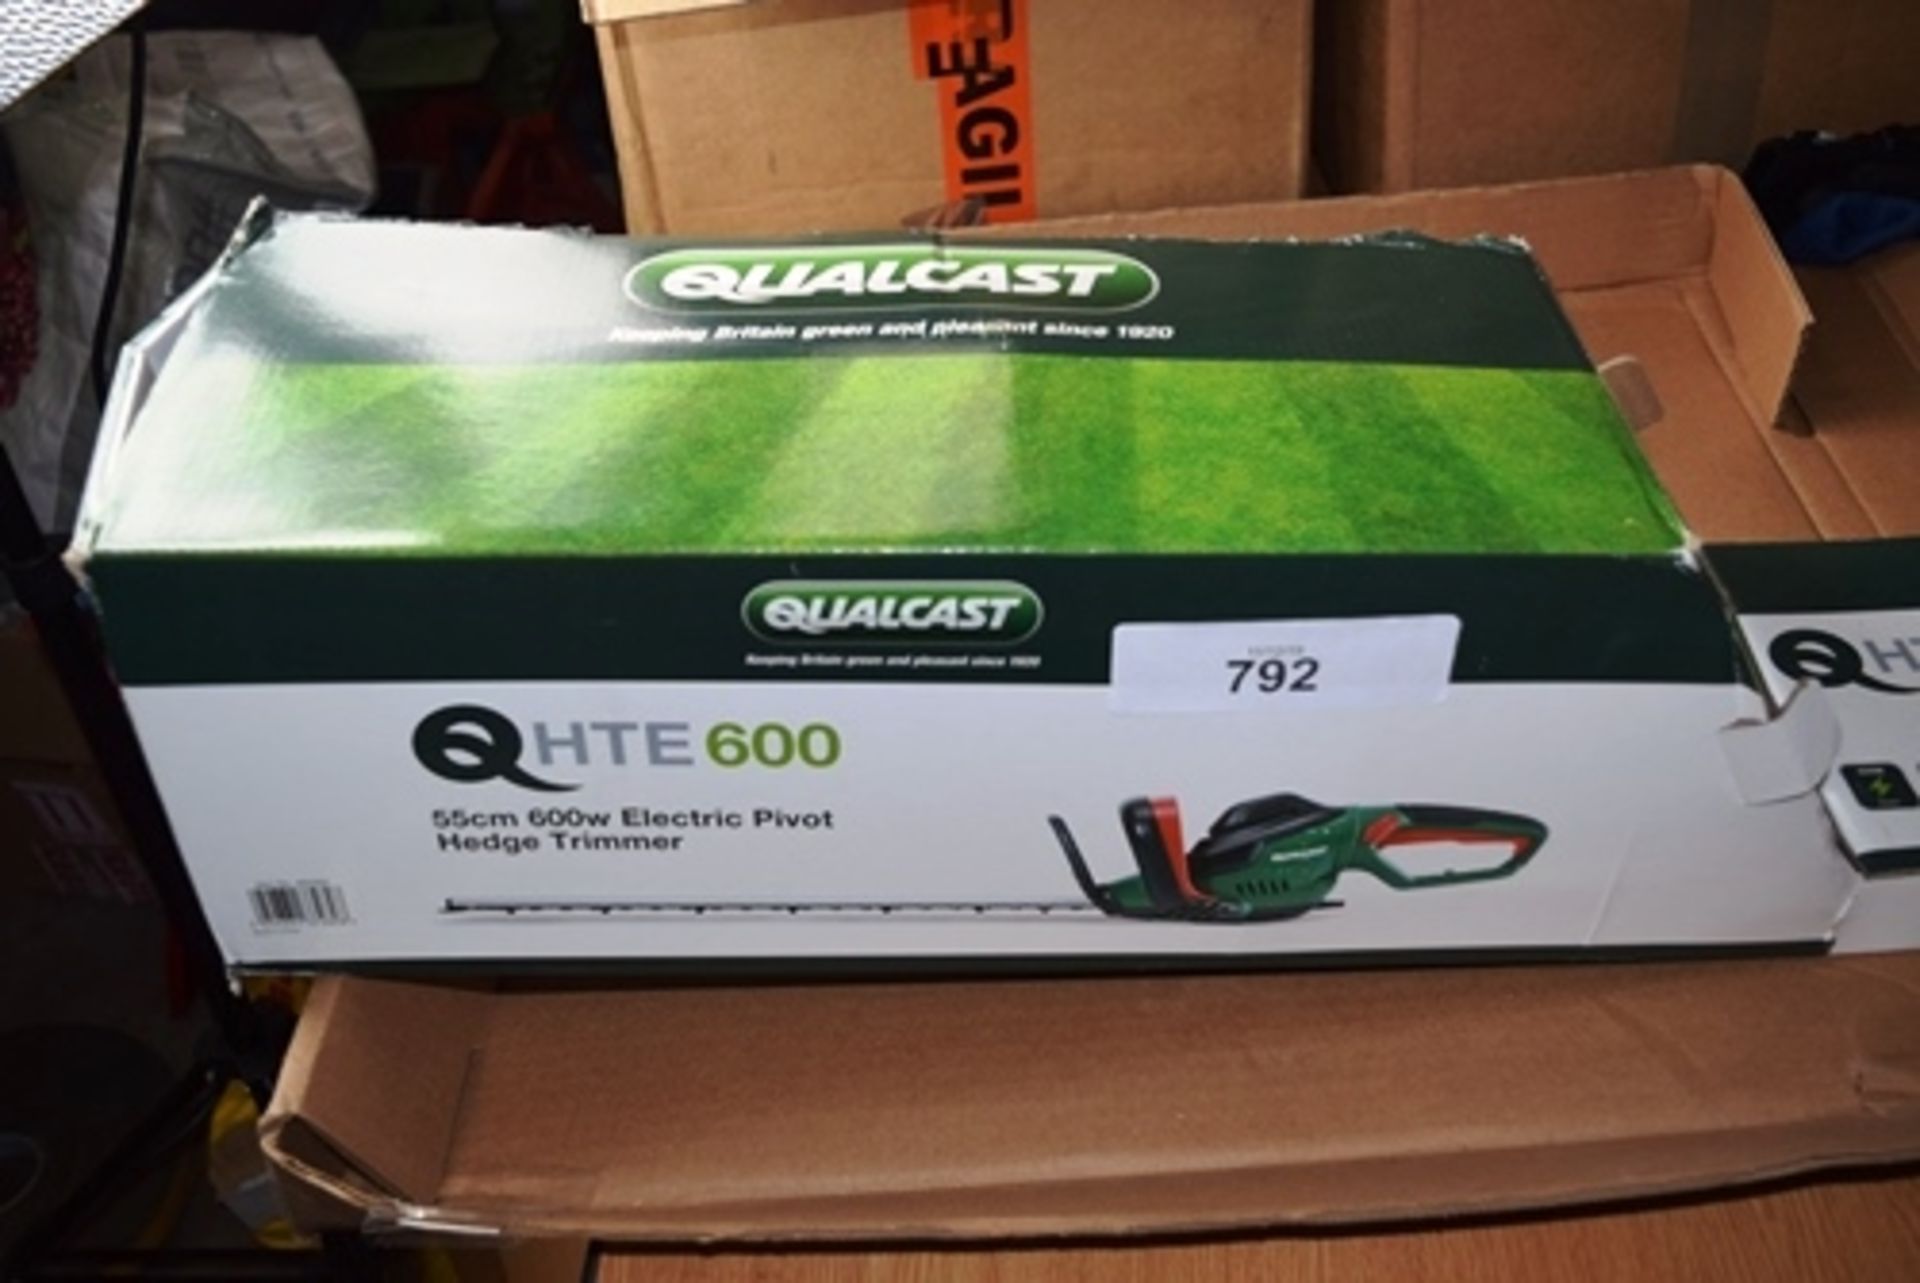 1 x Qualcast QHTE600 55cm, 600W electric pivot hedge trimmer, 240V - New in box (CB4)